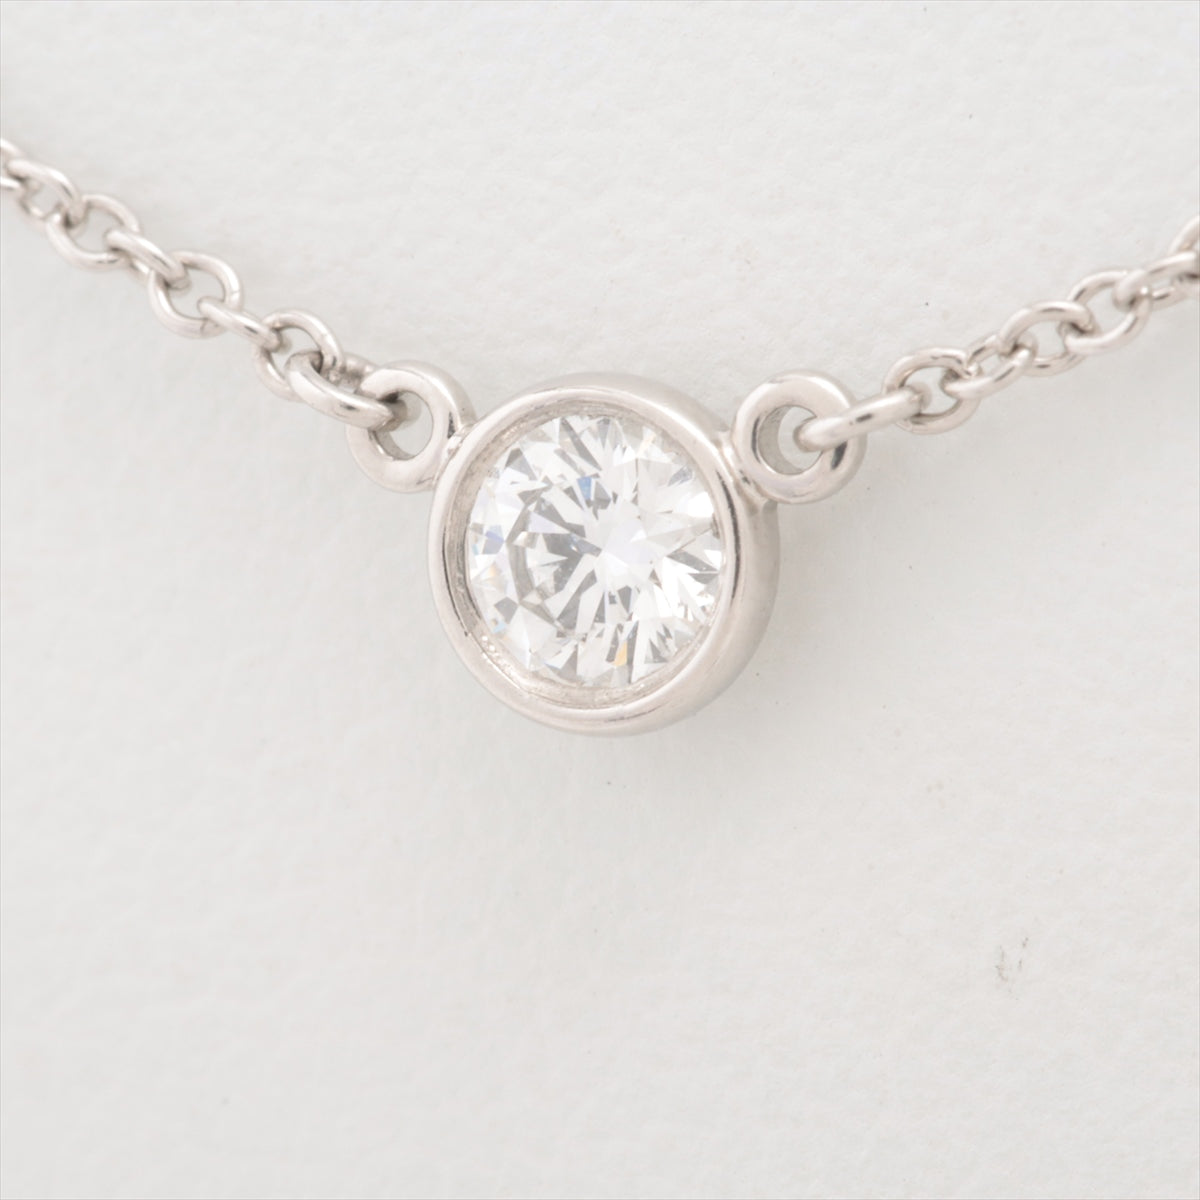 Tiffany Bazaar 1P Diamond Necklace Pt950 2.4g diameter approximately 4.45mm